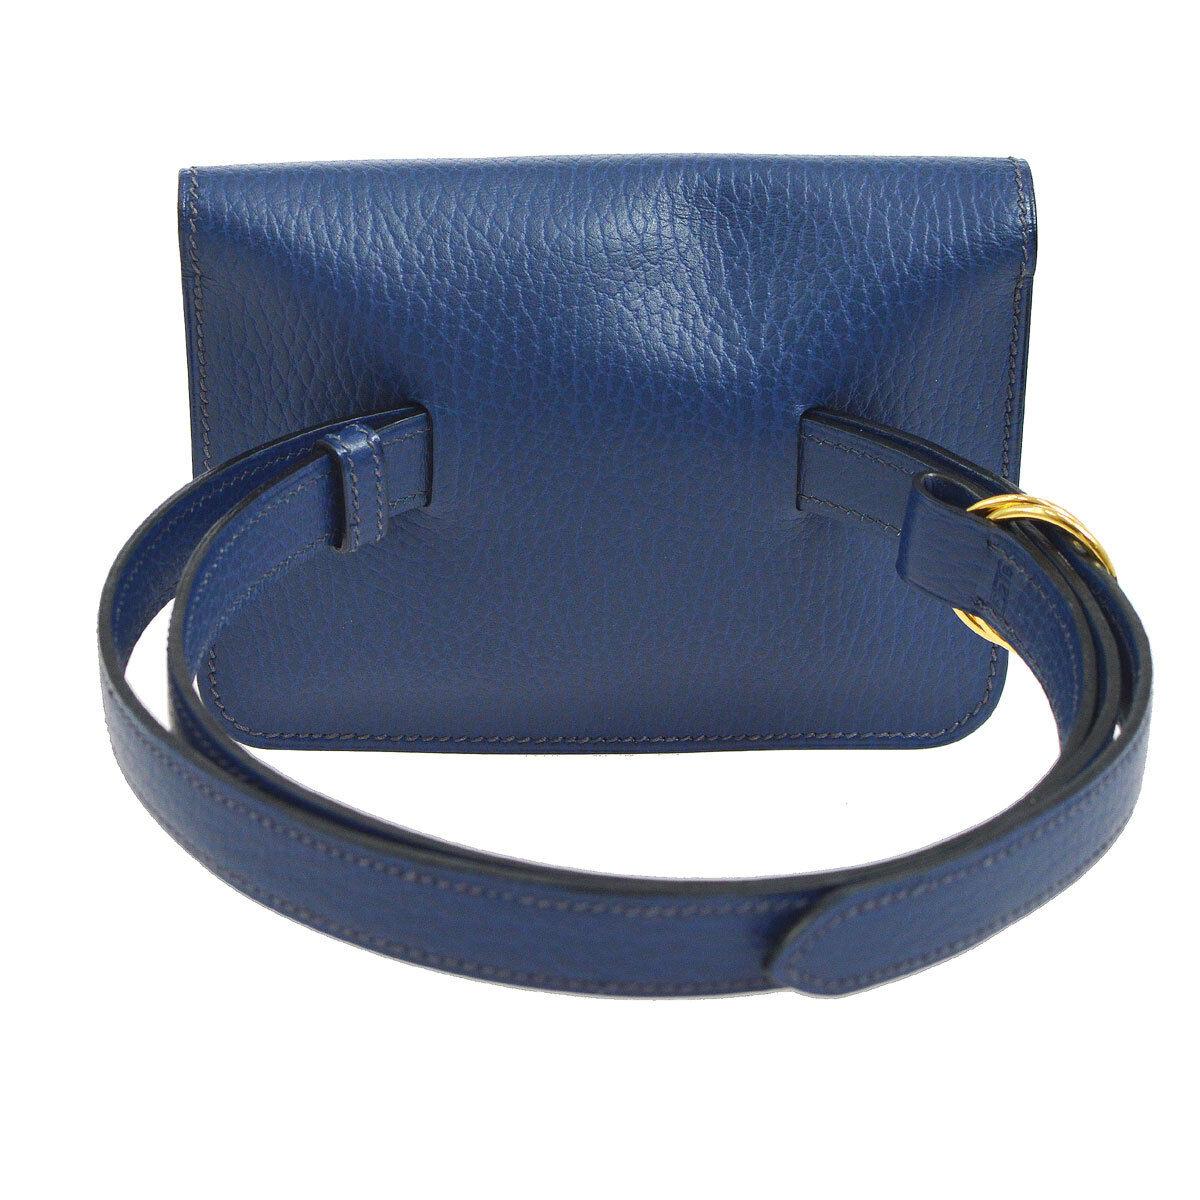 Hermes Blue Leather Gold Fold Over Fanny Pack Flap Bum Waist Belt Bag

Leather
Gold tone hardware
Leather lining
Snap closure
Total belt strap length 39.5